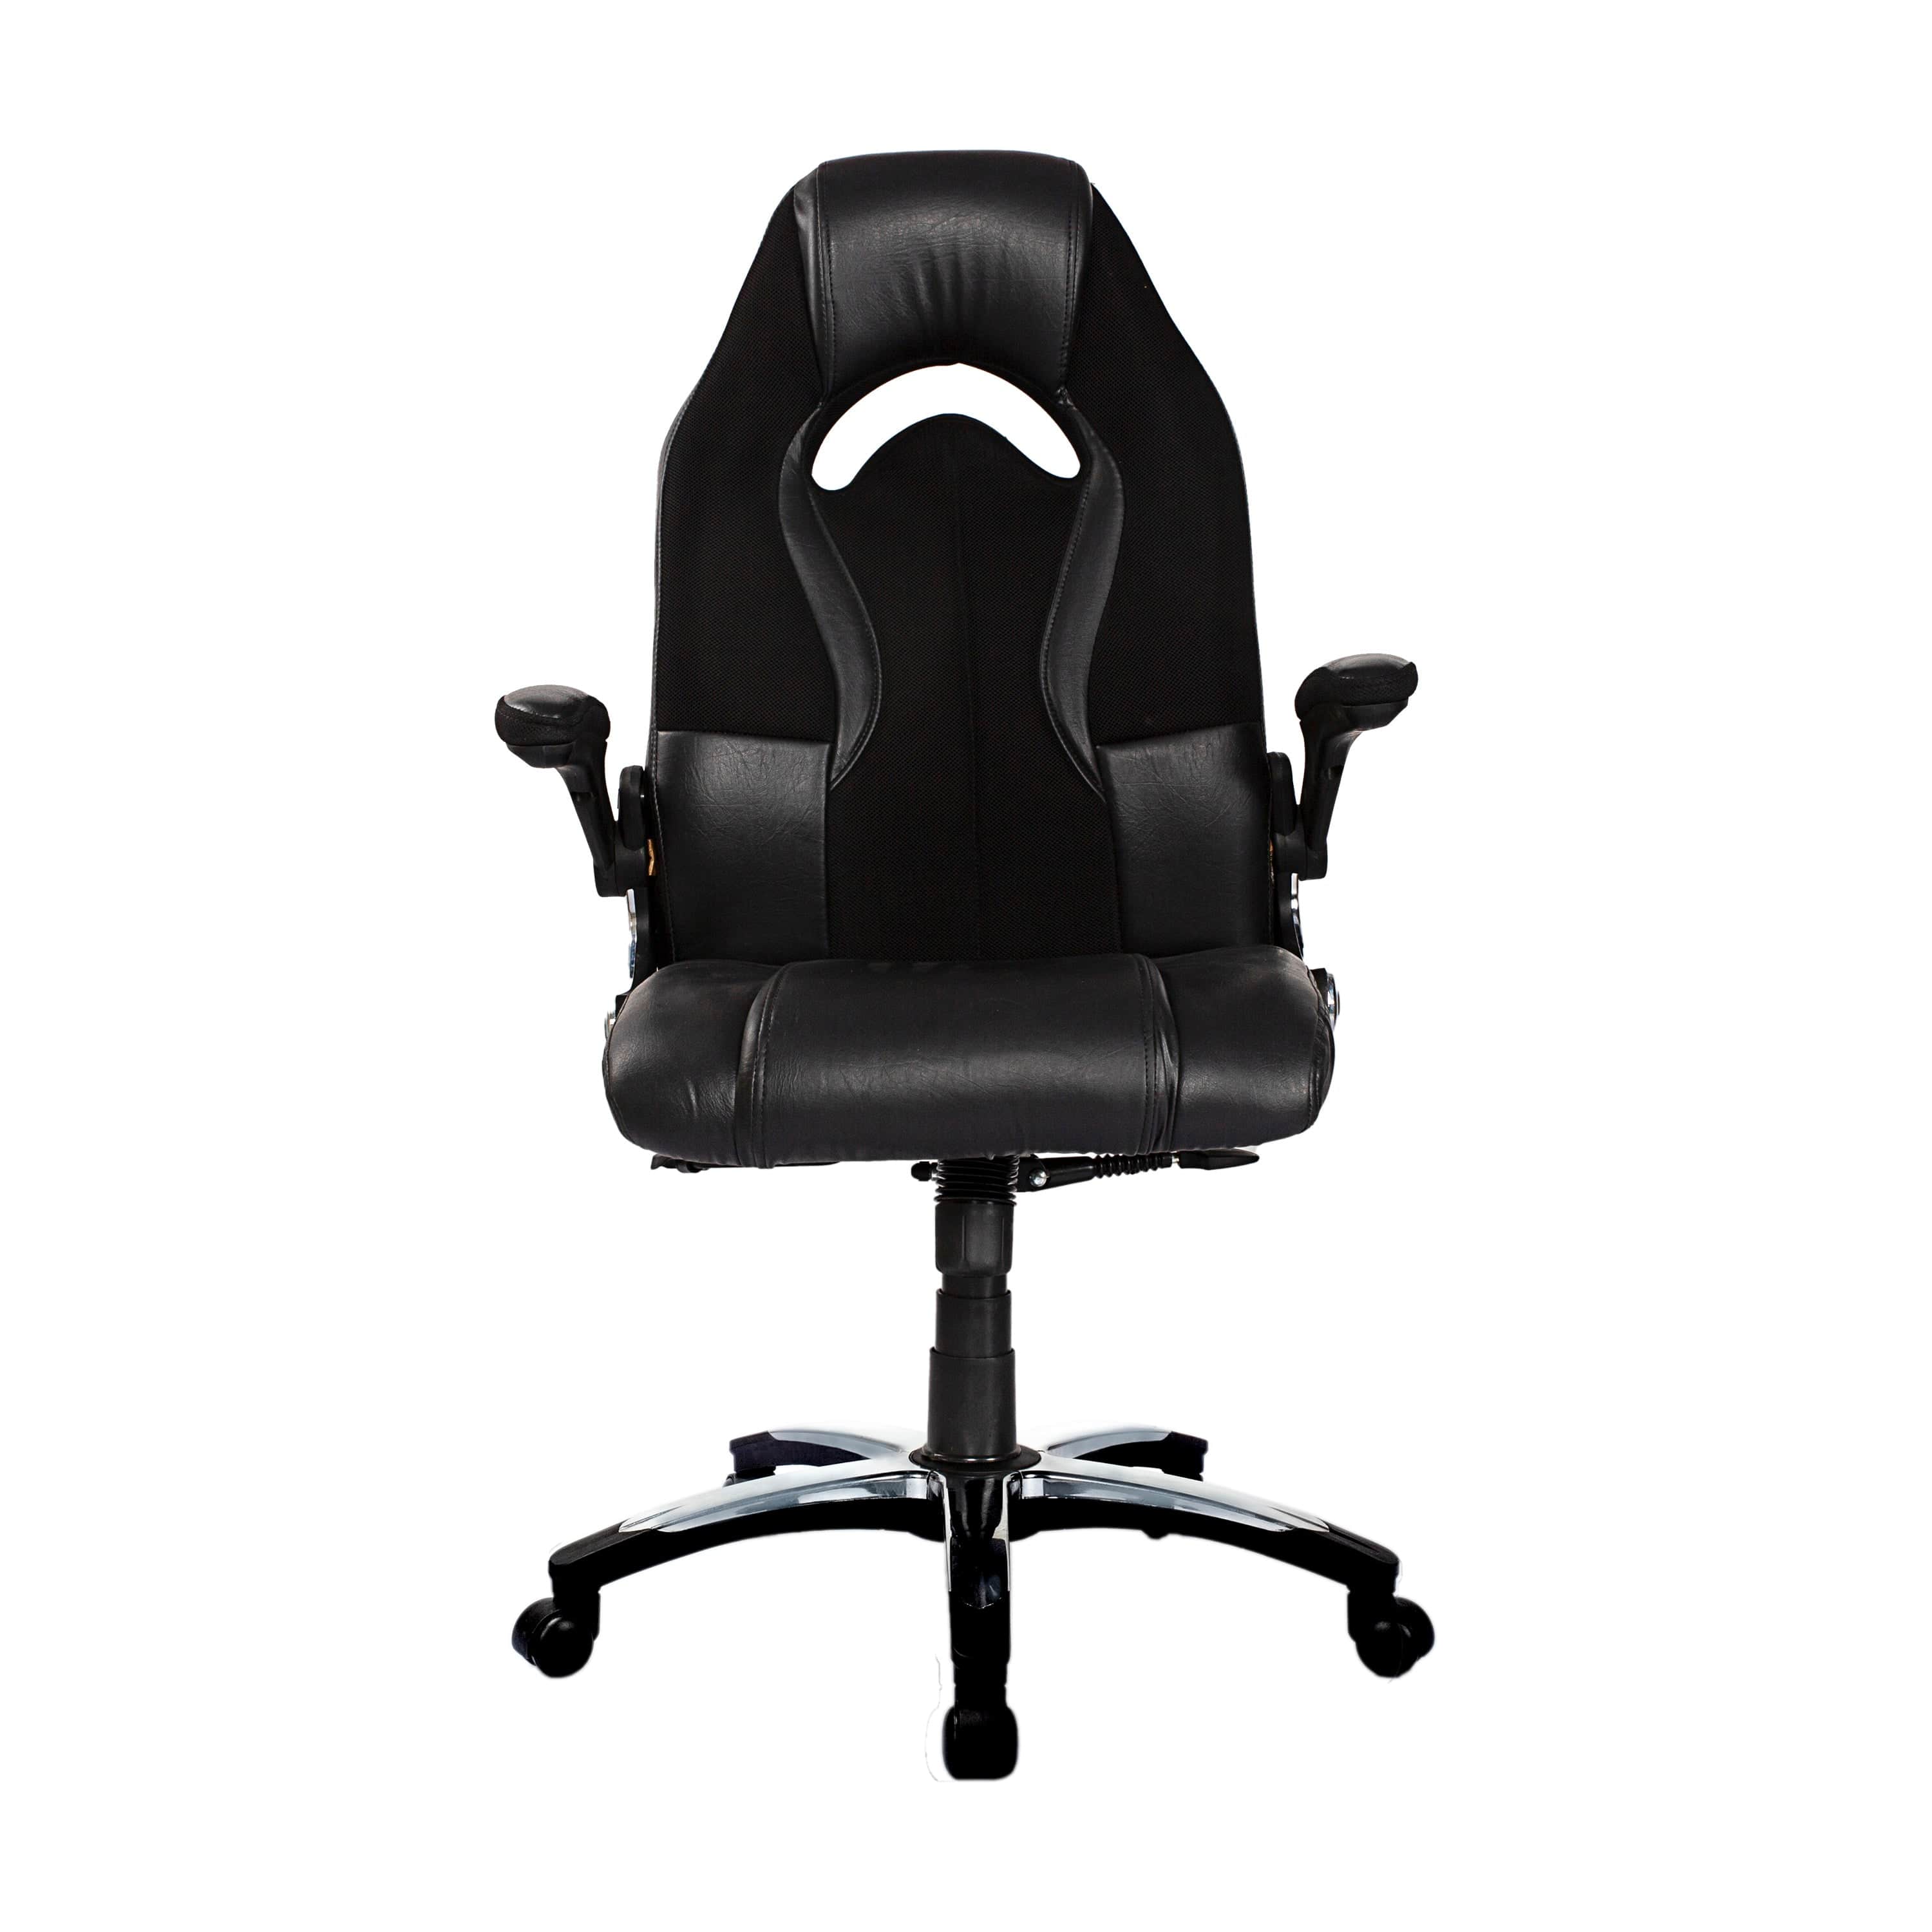 Adiko High Back Designer Gaming Chair in Black